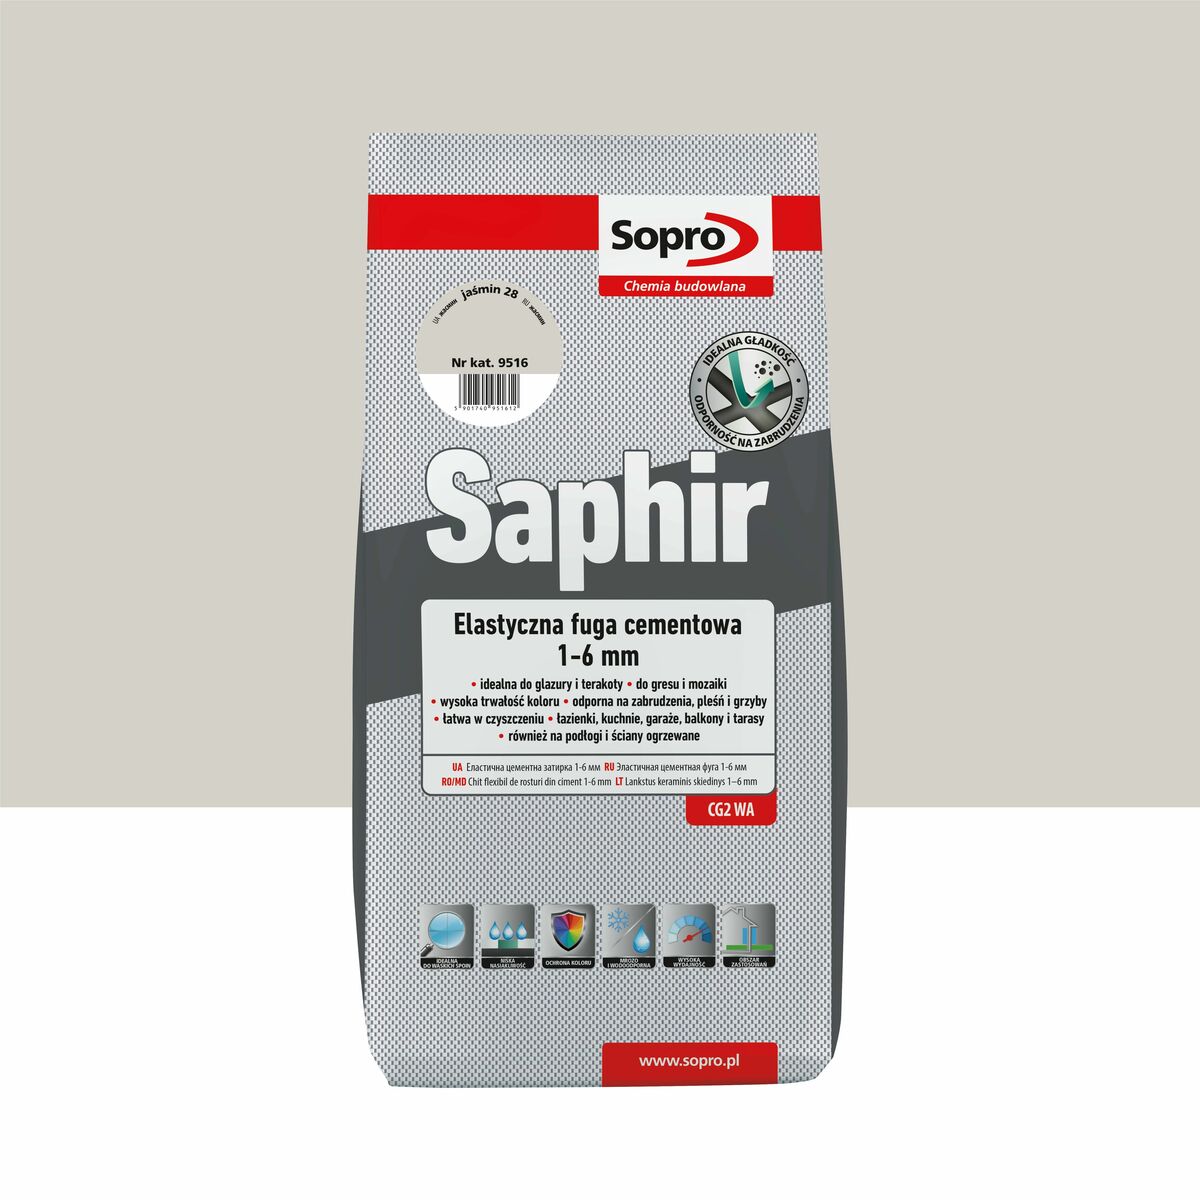 Fuga elastyczna Saphir Jaśmin 28 3 kg Sopro